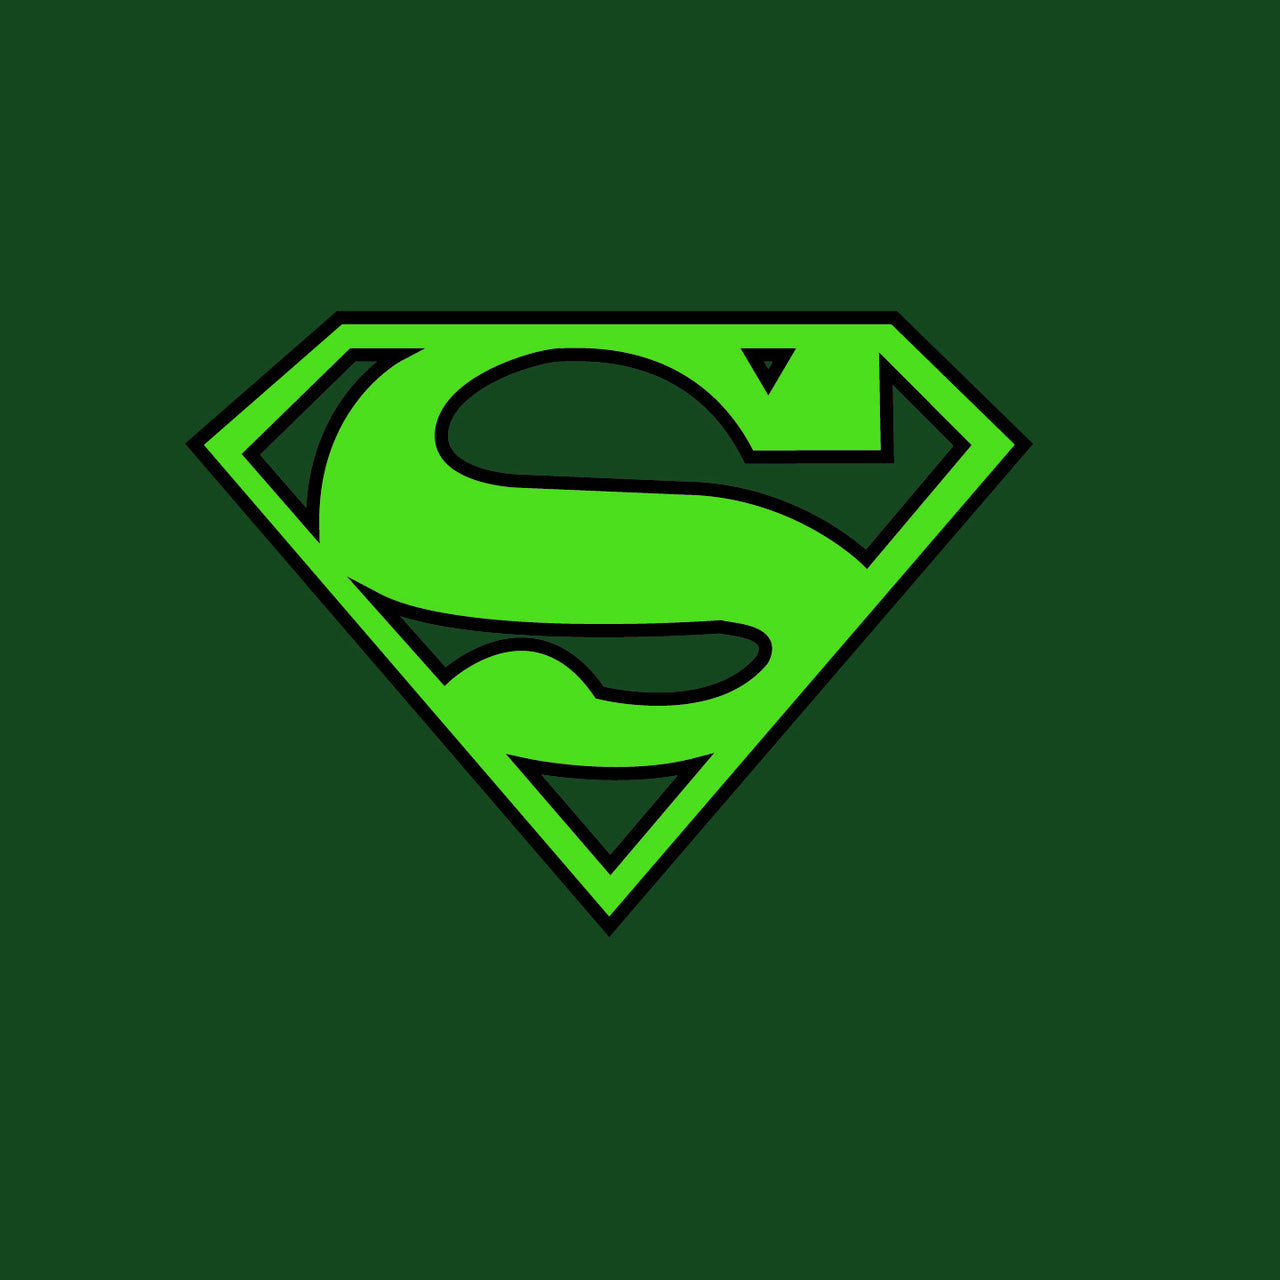 Superman Green Logo on Dark Green Colored Fitted tshirt for Women - TshirtNow.net - 2